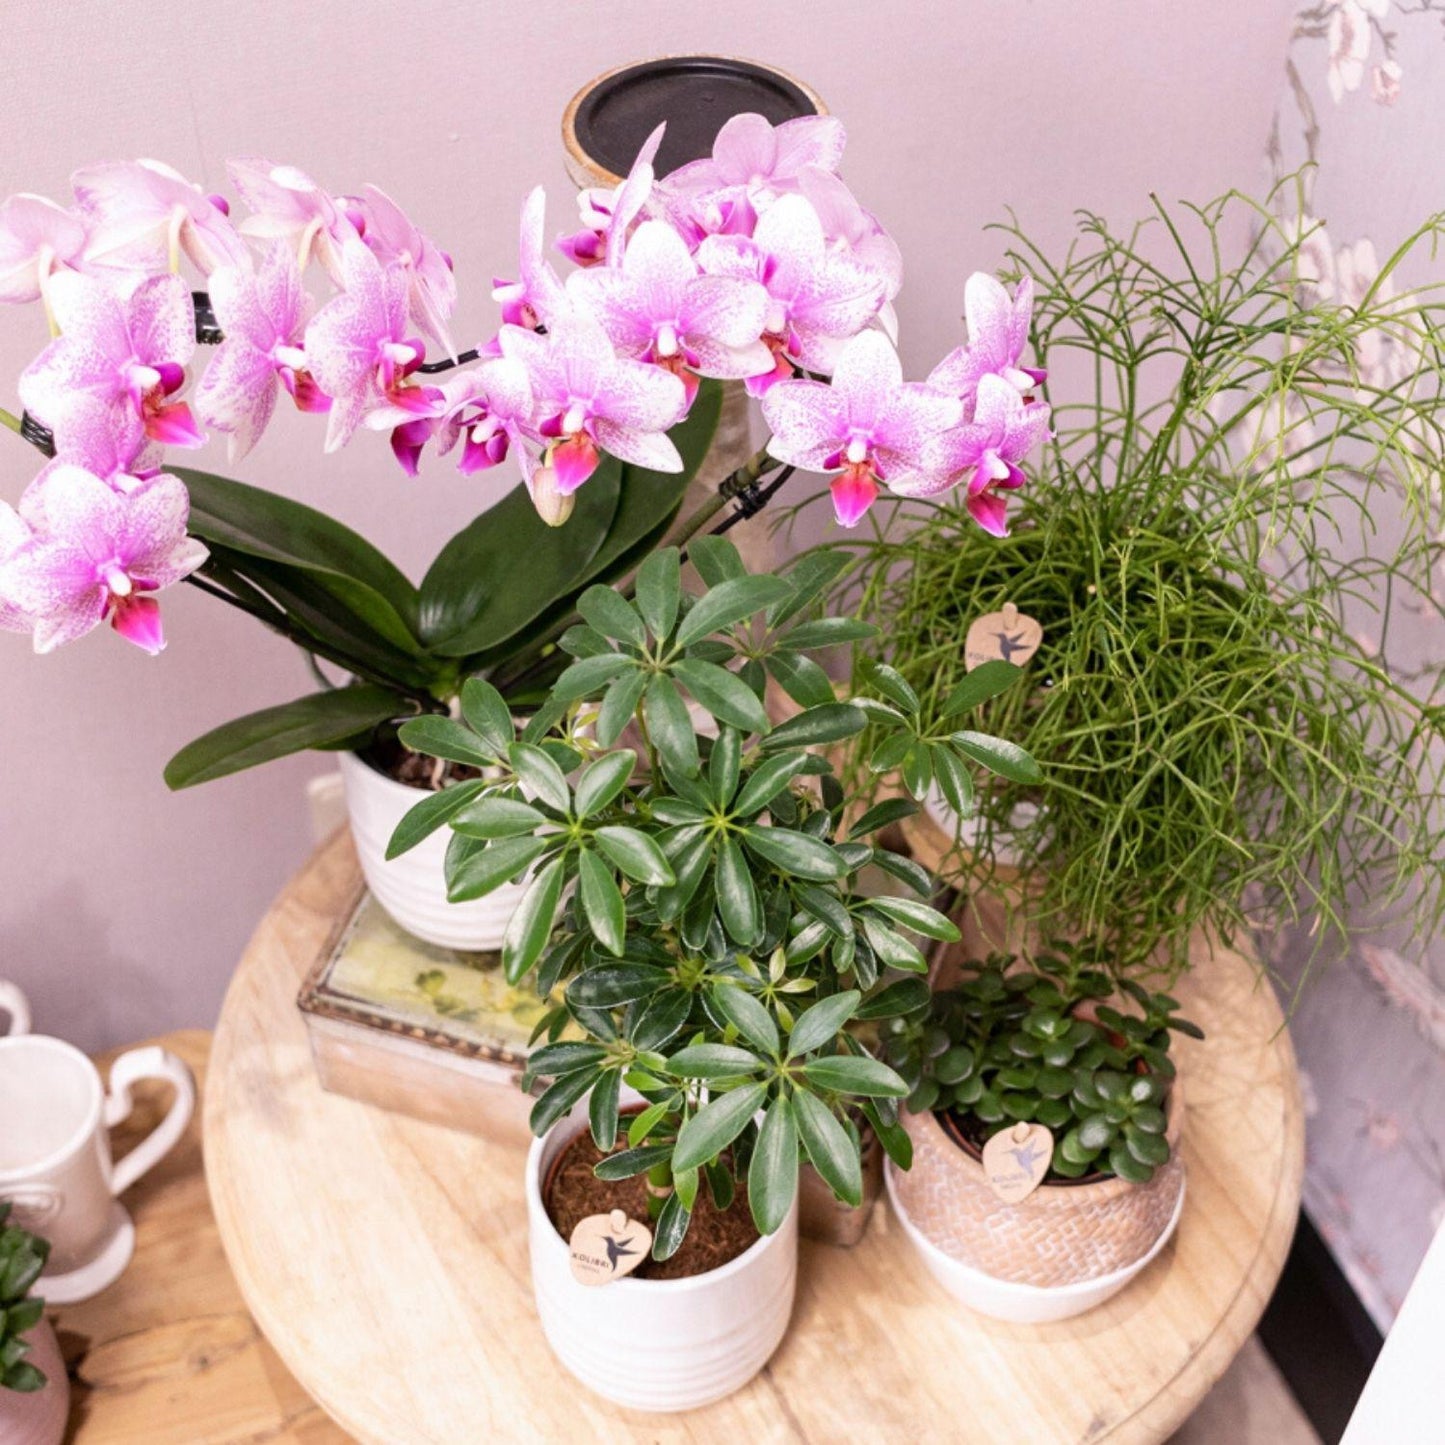 Kolibri Orchids | Roze Phalaenopsis orchidee - Mineral Rotterdam - potmaat Ø9cm | bloeiende kamerplant - vers van de kweker